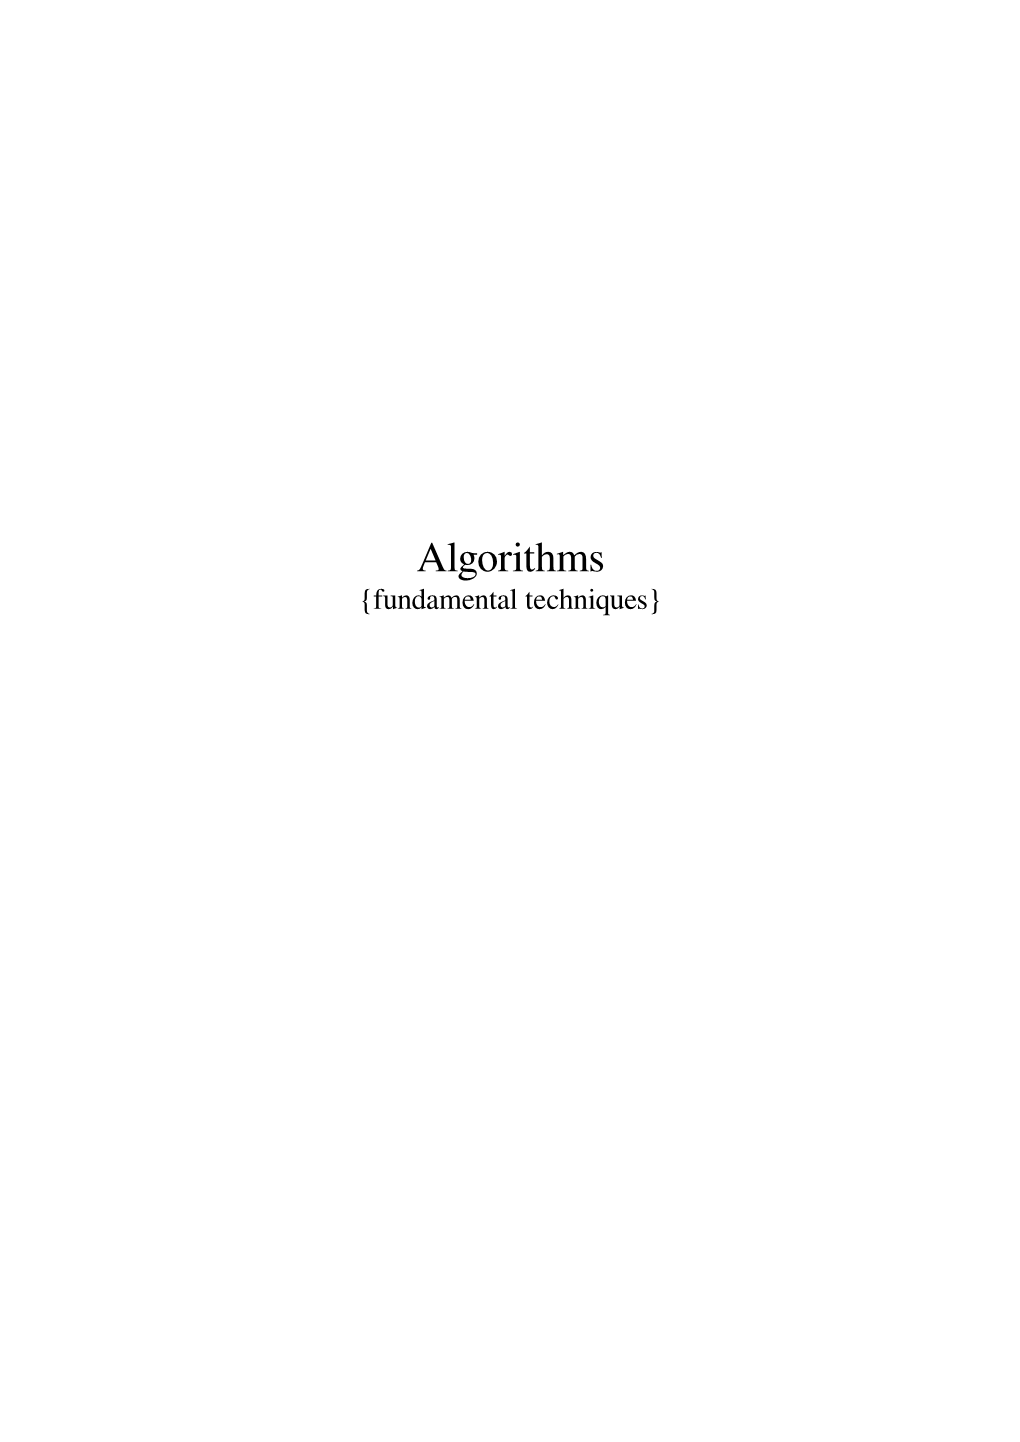 Algorithms {Fundamental Techniques} Contents